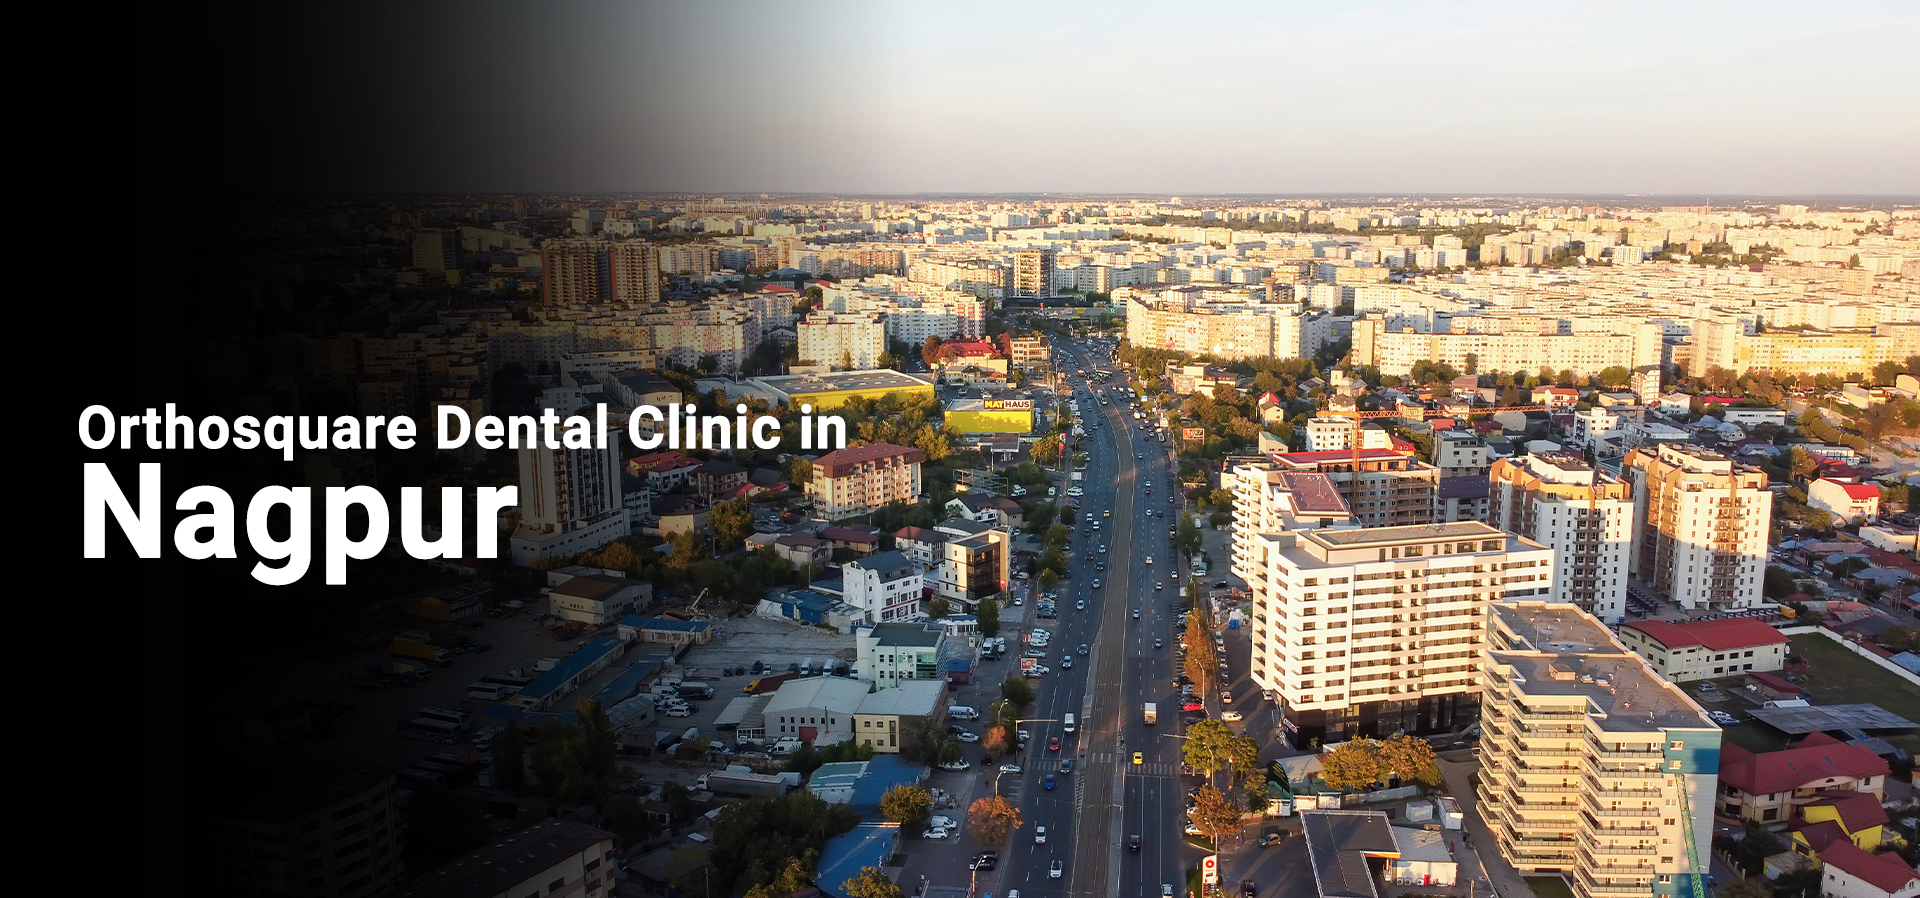 Nagpur orthosquare dental clinic